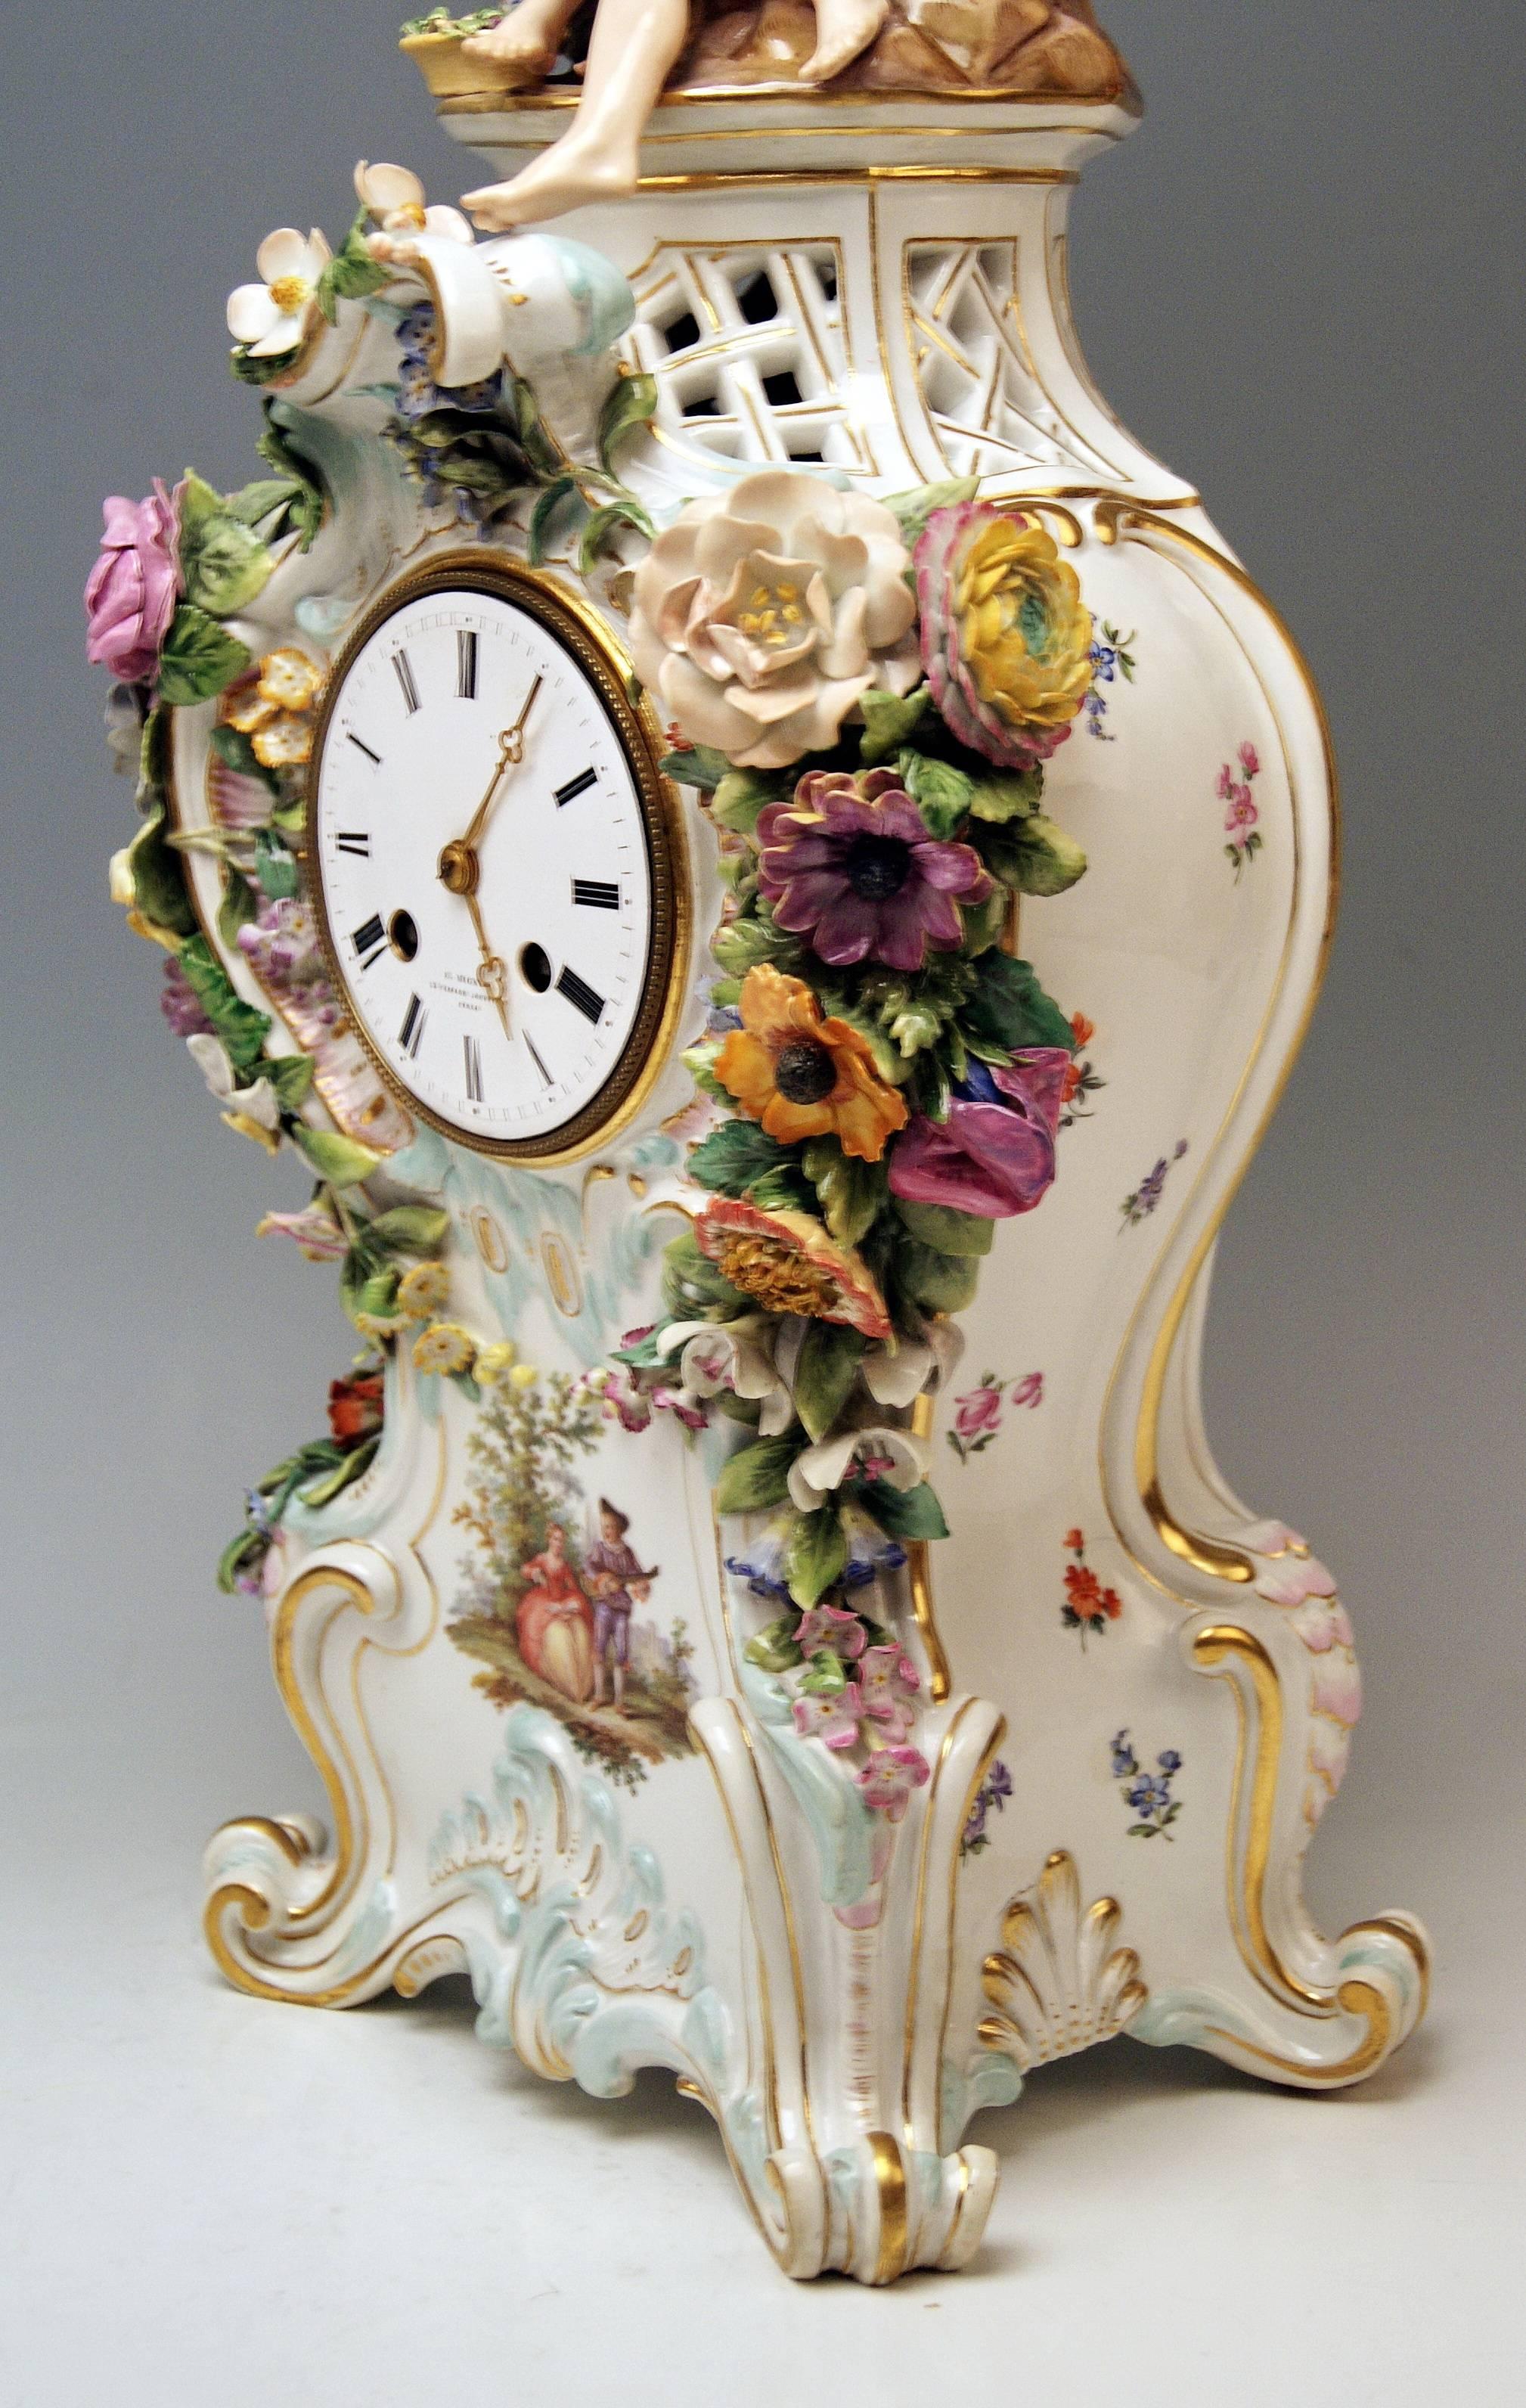 Porcelain Meissen Mantle Table Clock Figurines Flowers Enamel Clockface made circa 1860